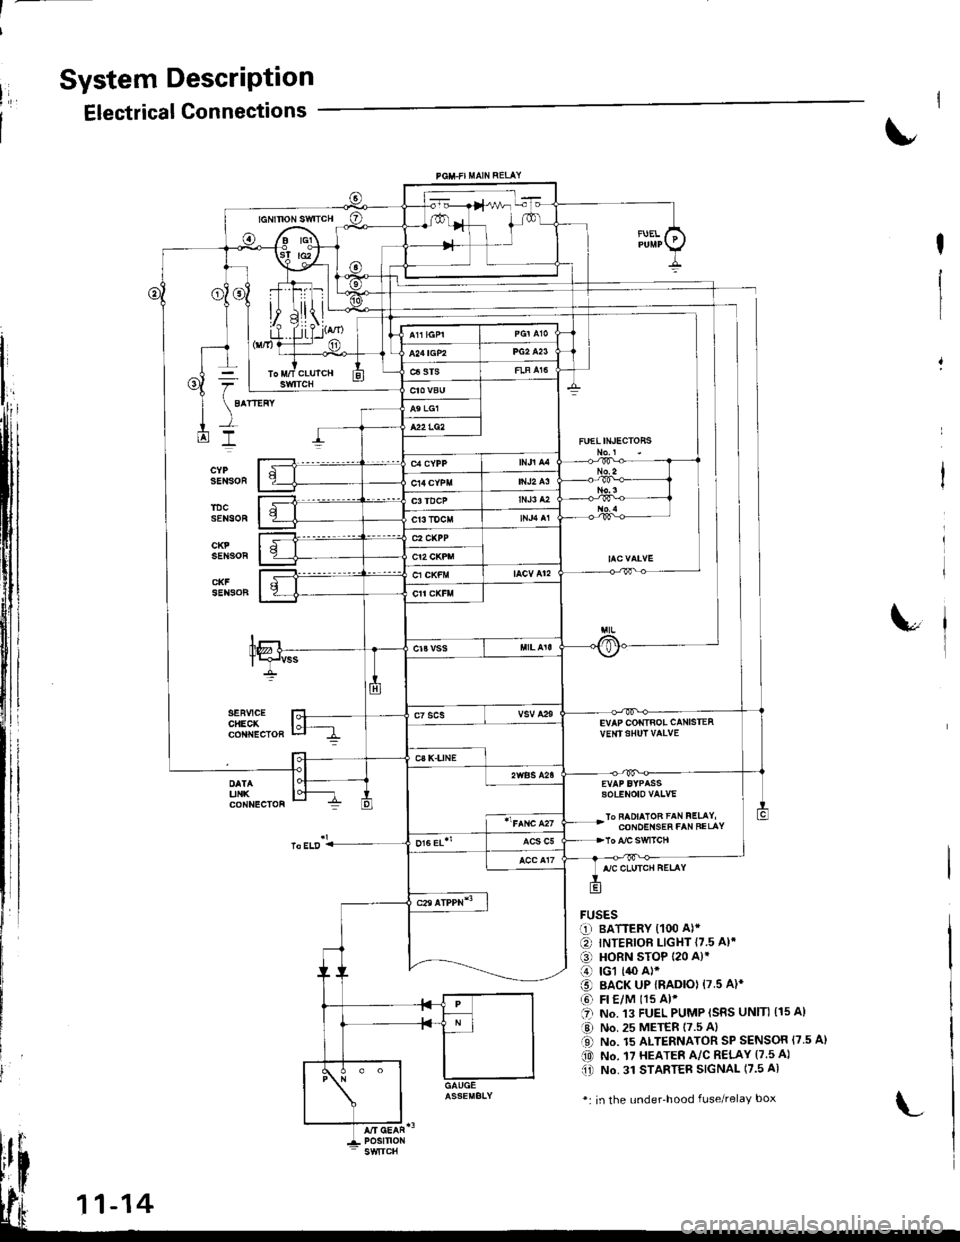 ACURA INTEGRA 1998  Service Repair Manual System DescriPtion
Electrical Connections
FUELINECTOHS
EVAP COIiTIBOL CANISTEAvE|rISHUT VAIVE
sotENoto vaLvE
lo FAOIAIOB FAN FELAY,CONOEI{SEh FAN FELAY
FUSESr-1) BATTERY {100 A)*
€) INTERIOF LIGHT 